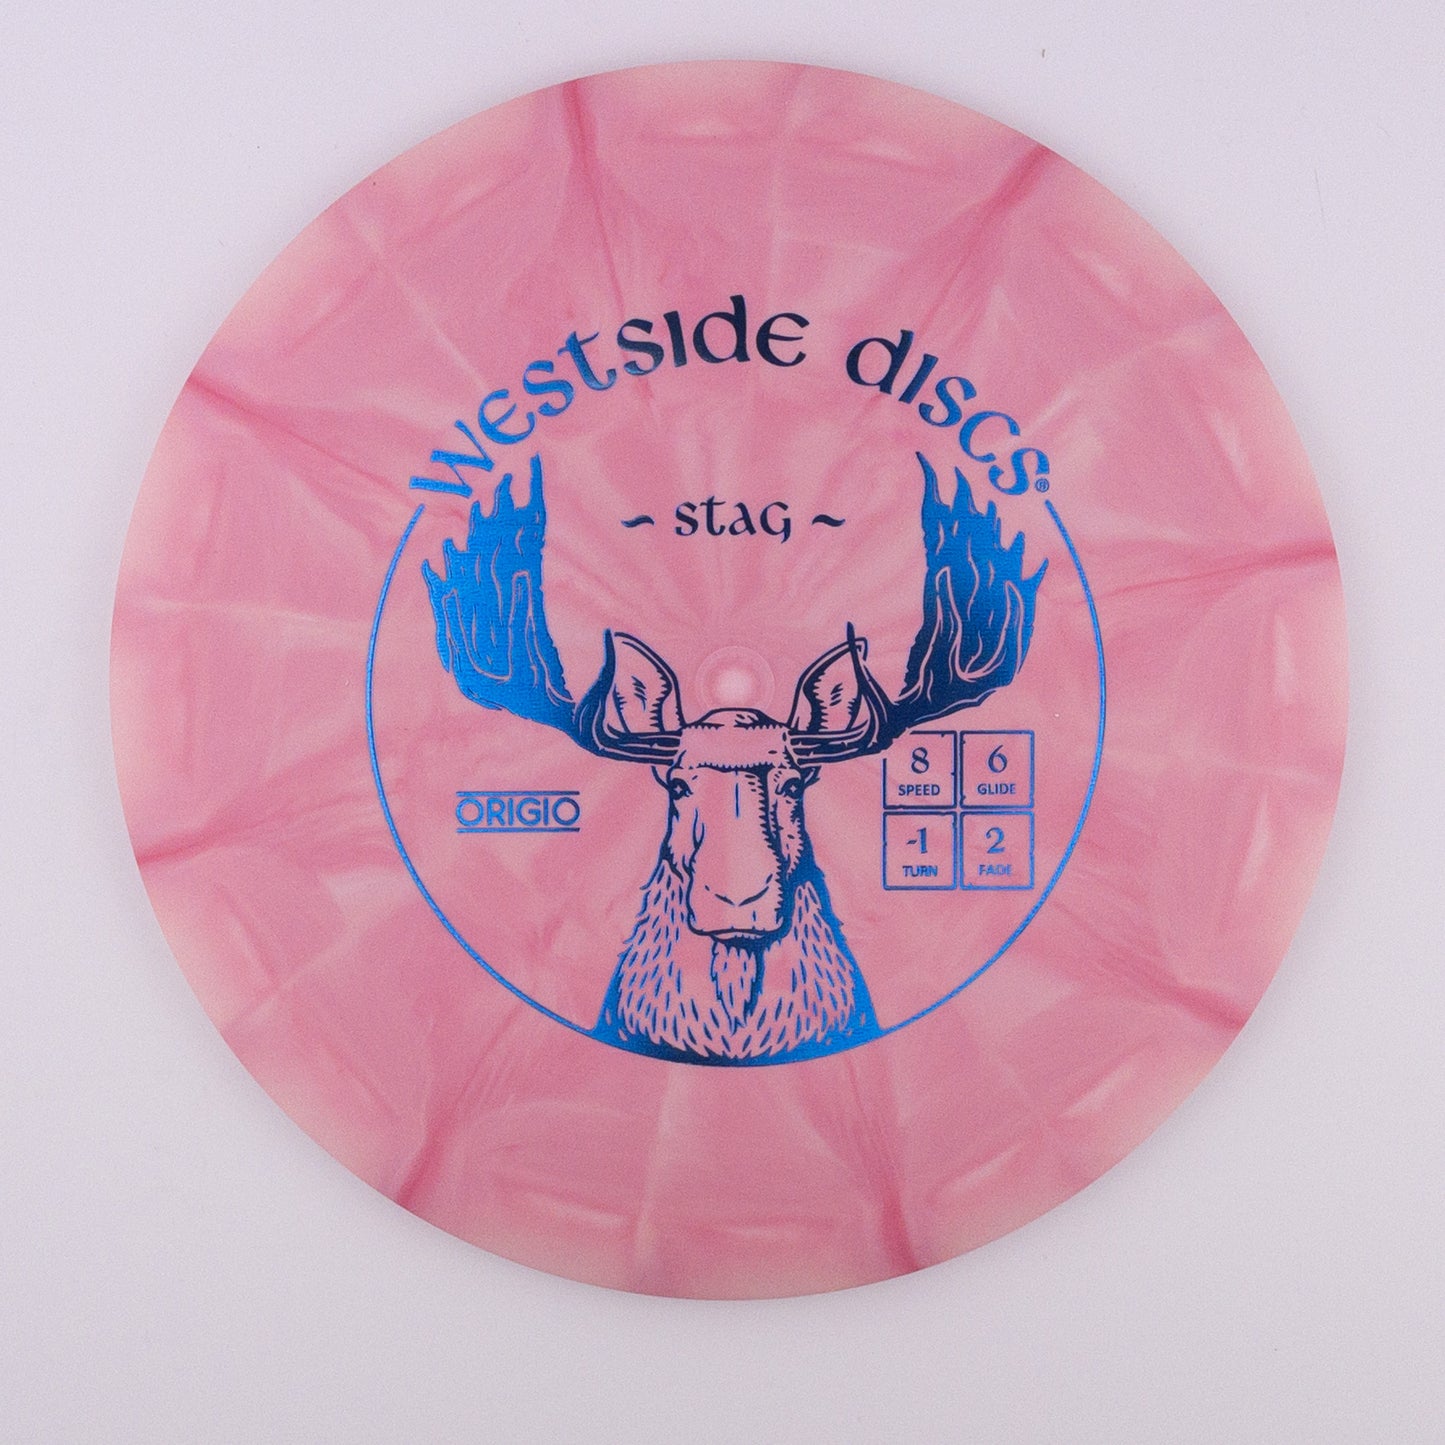 Westside Discs Origio Stag